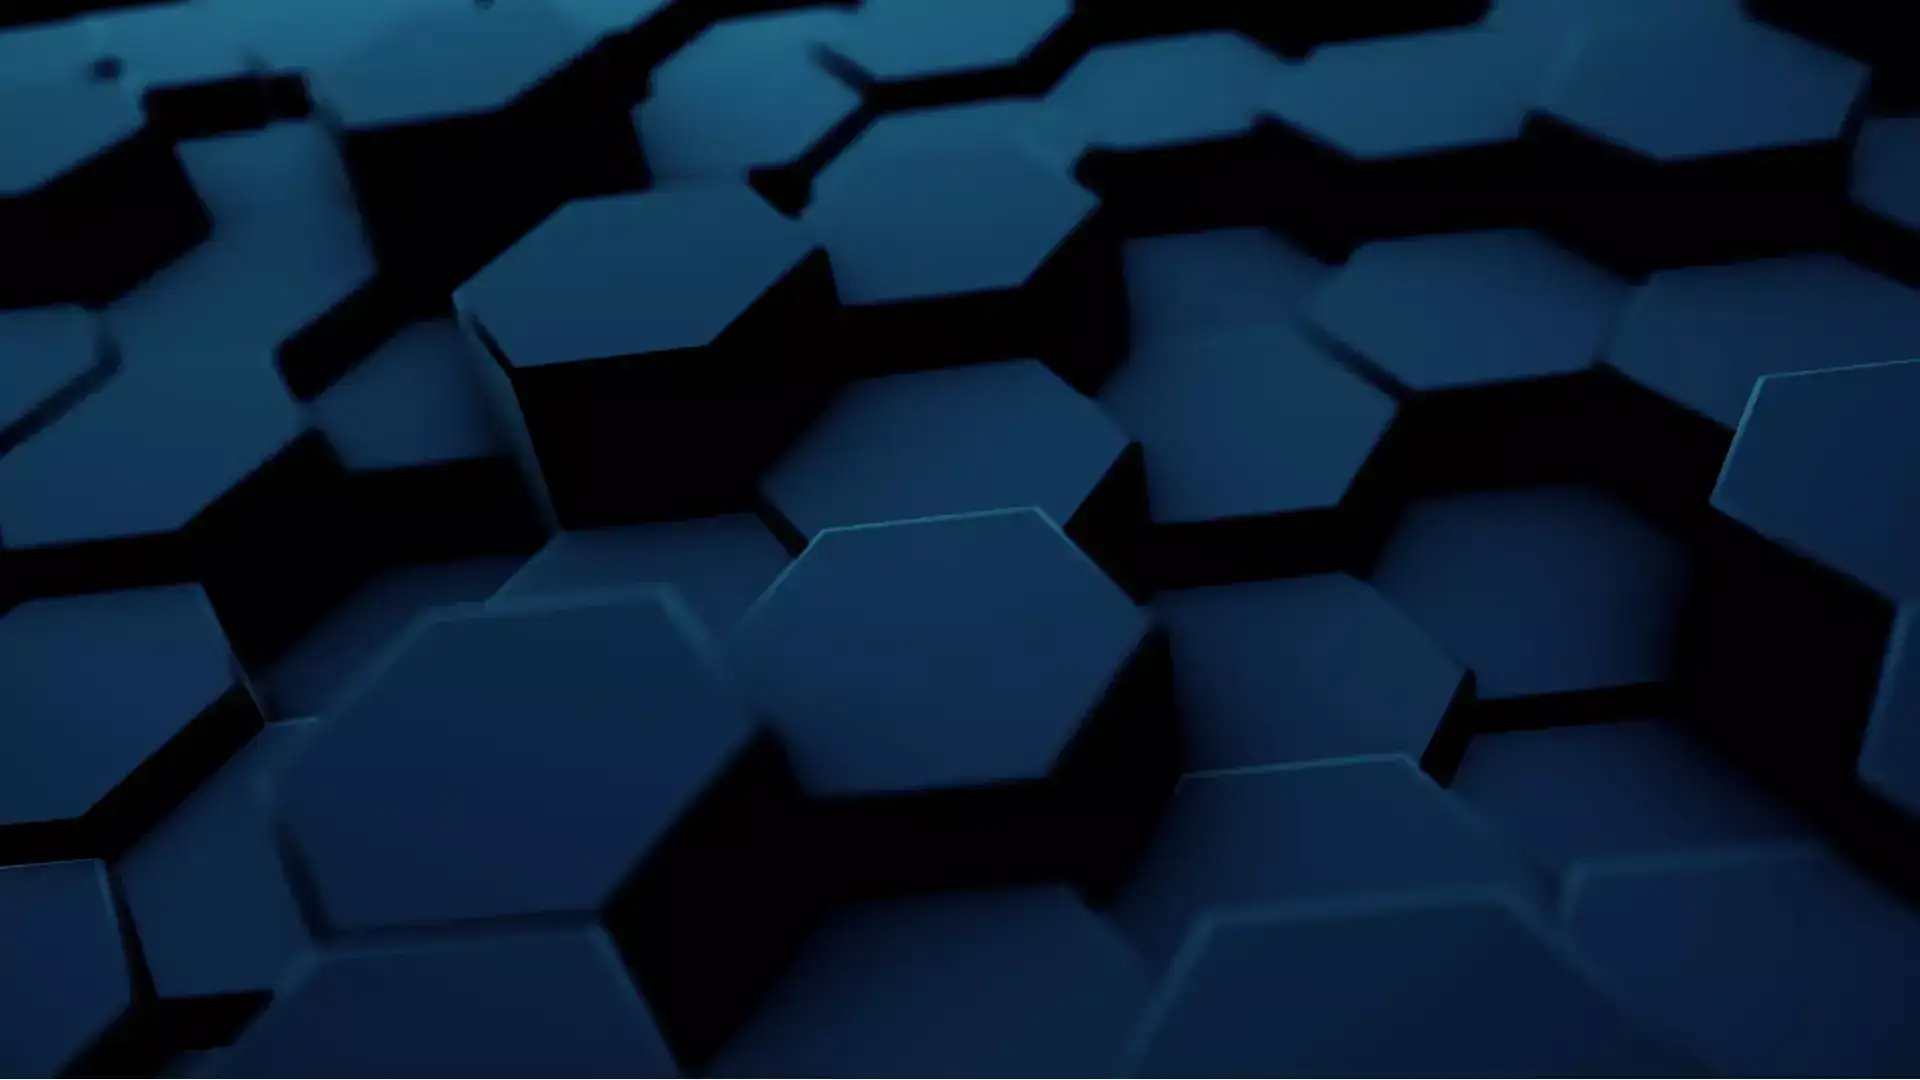 Serie de formas hexagonales negras impresas en un panel de cristal